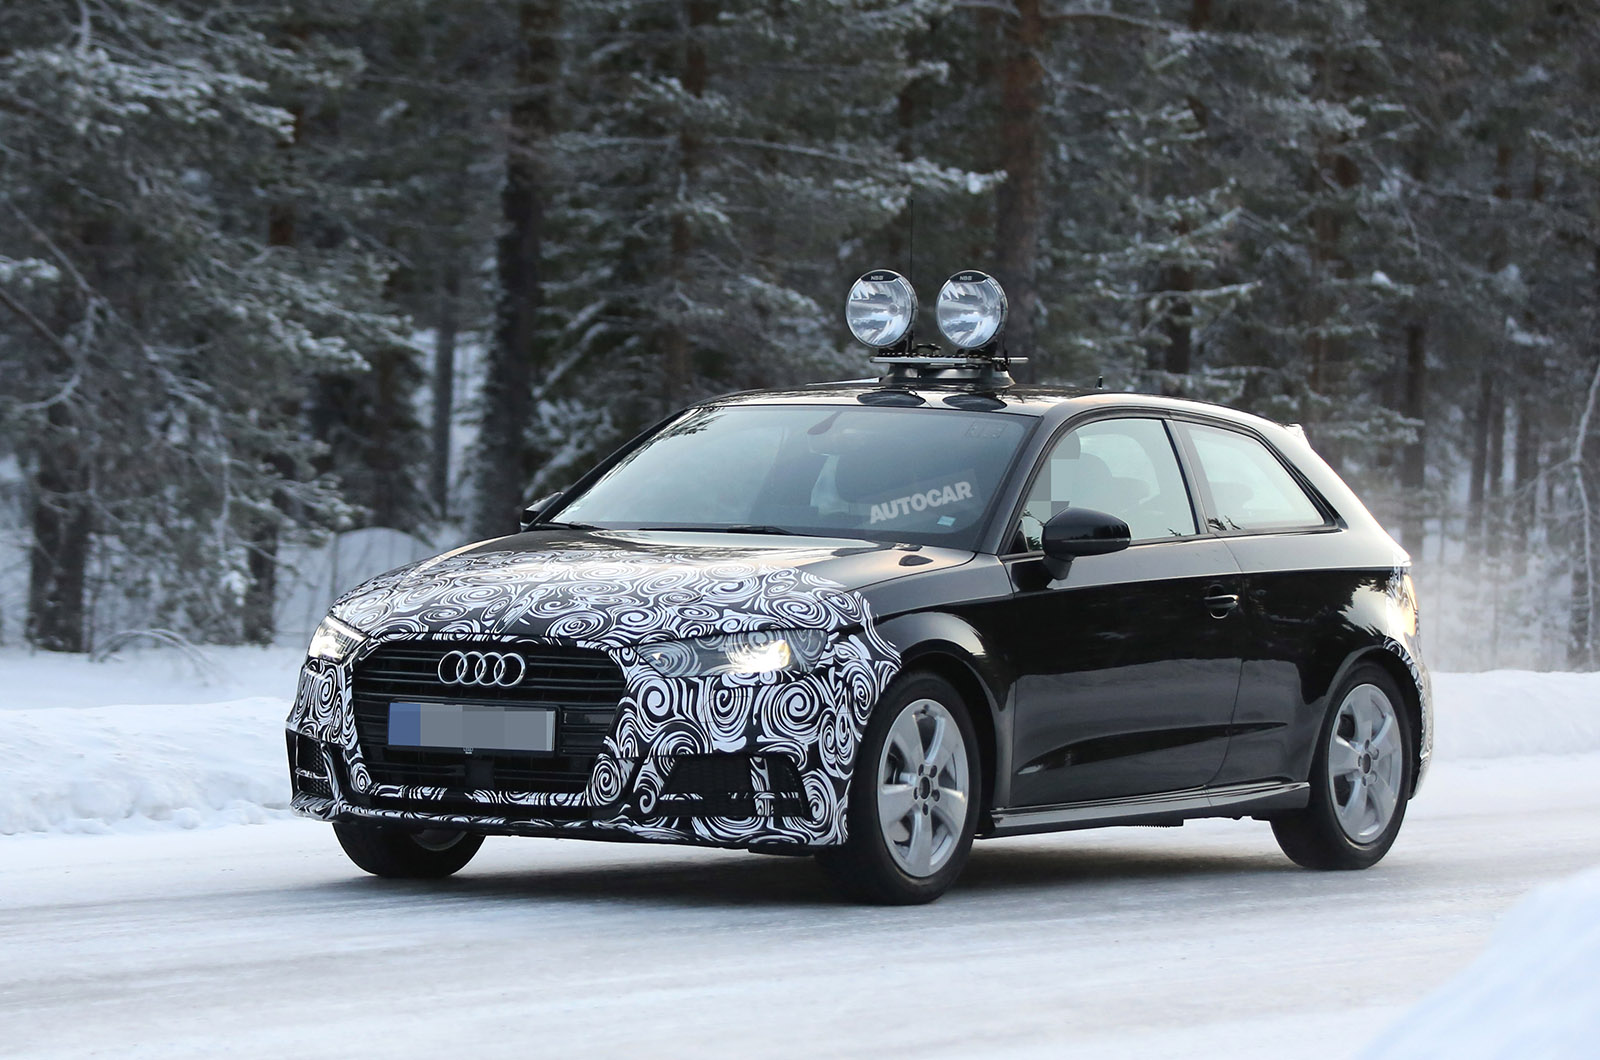 2016 Audi A3 hatch spied winter testing